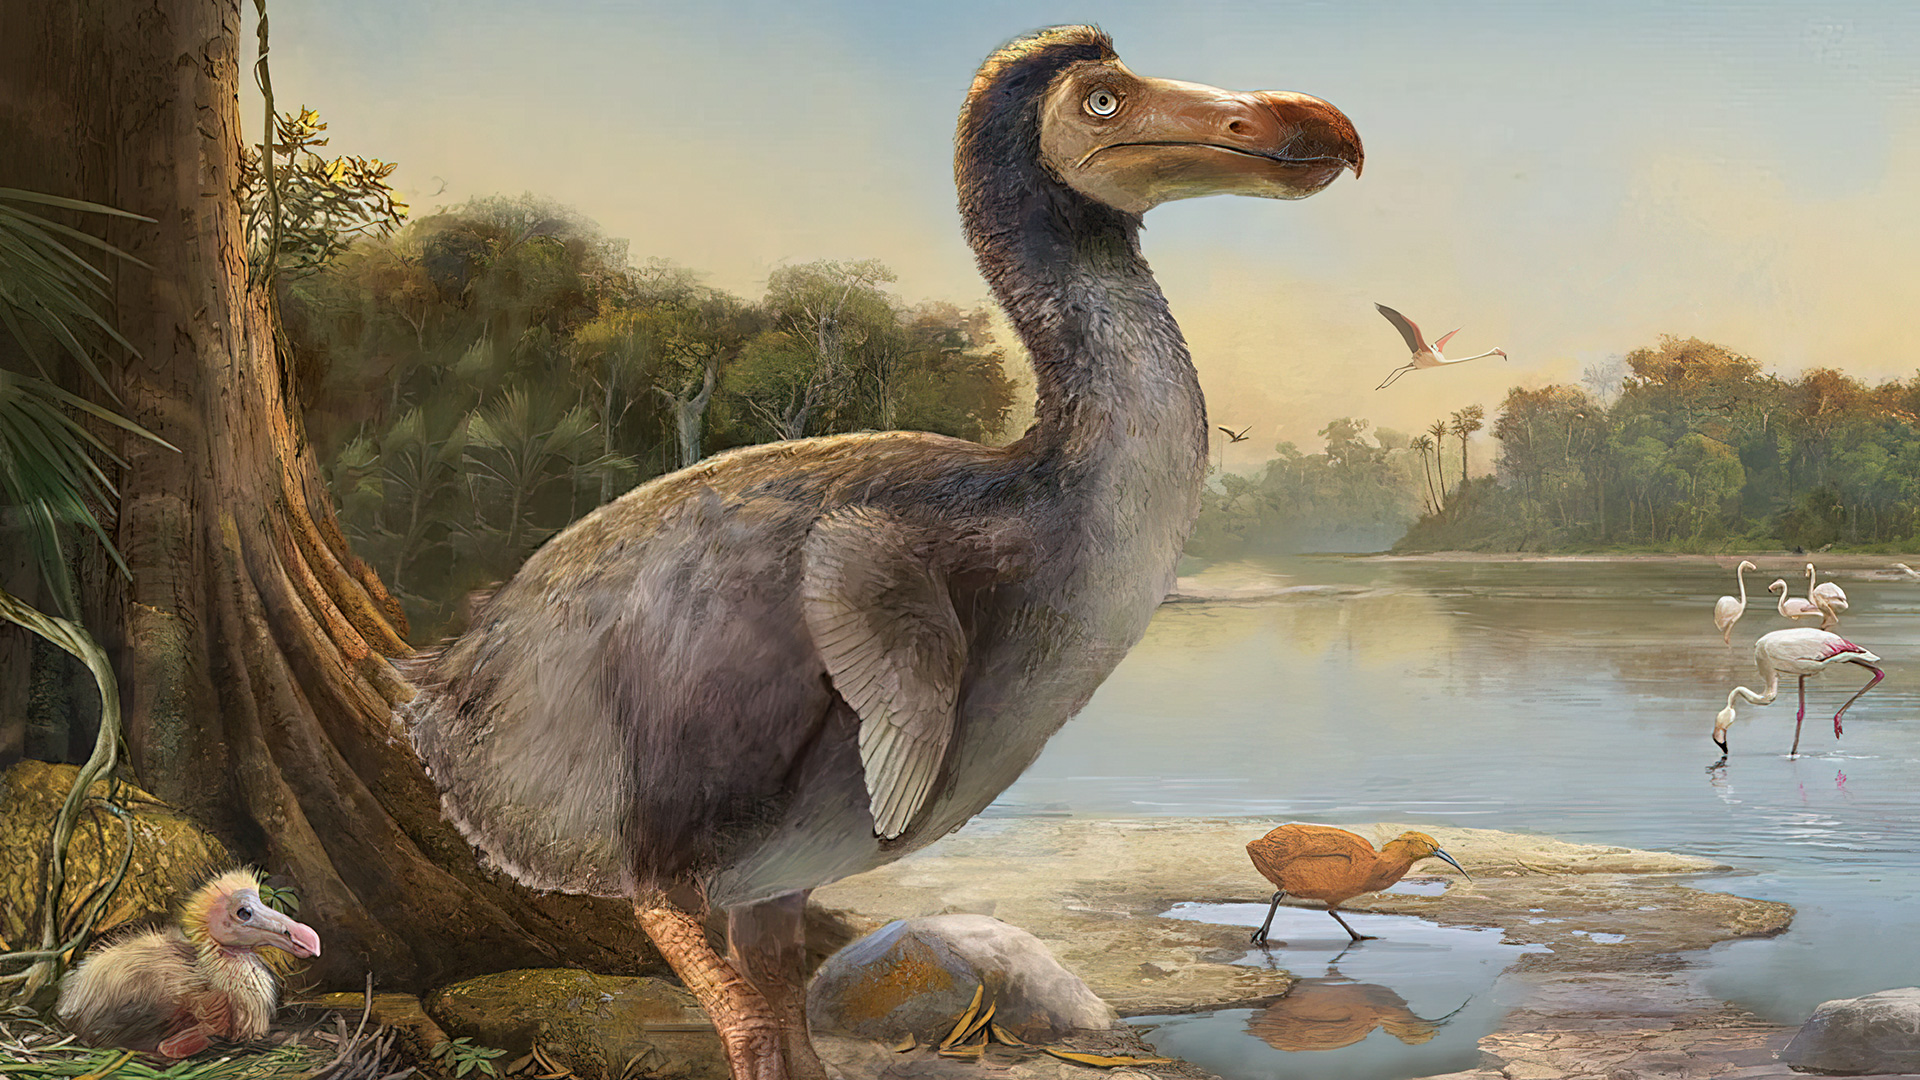 The Dodo Bird: A De-Extinction Challenge to Humanity's Perception